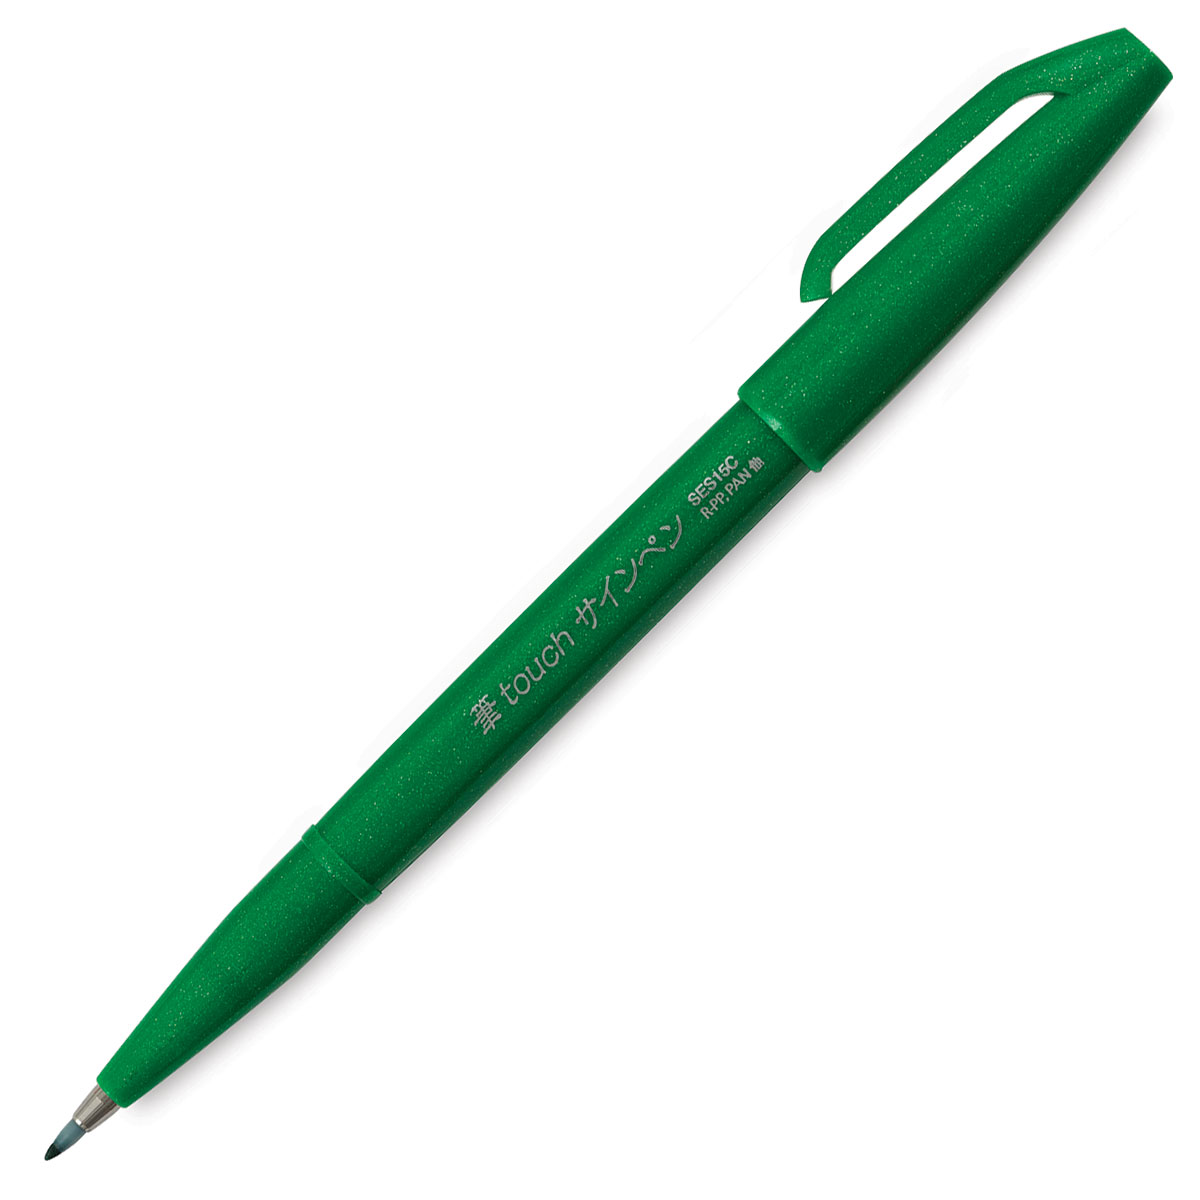 Pentel Arts Brush Tip Sign Pens and Sets